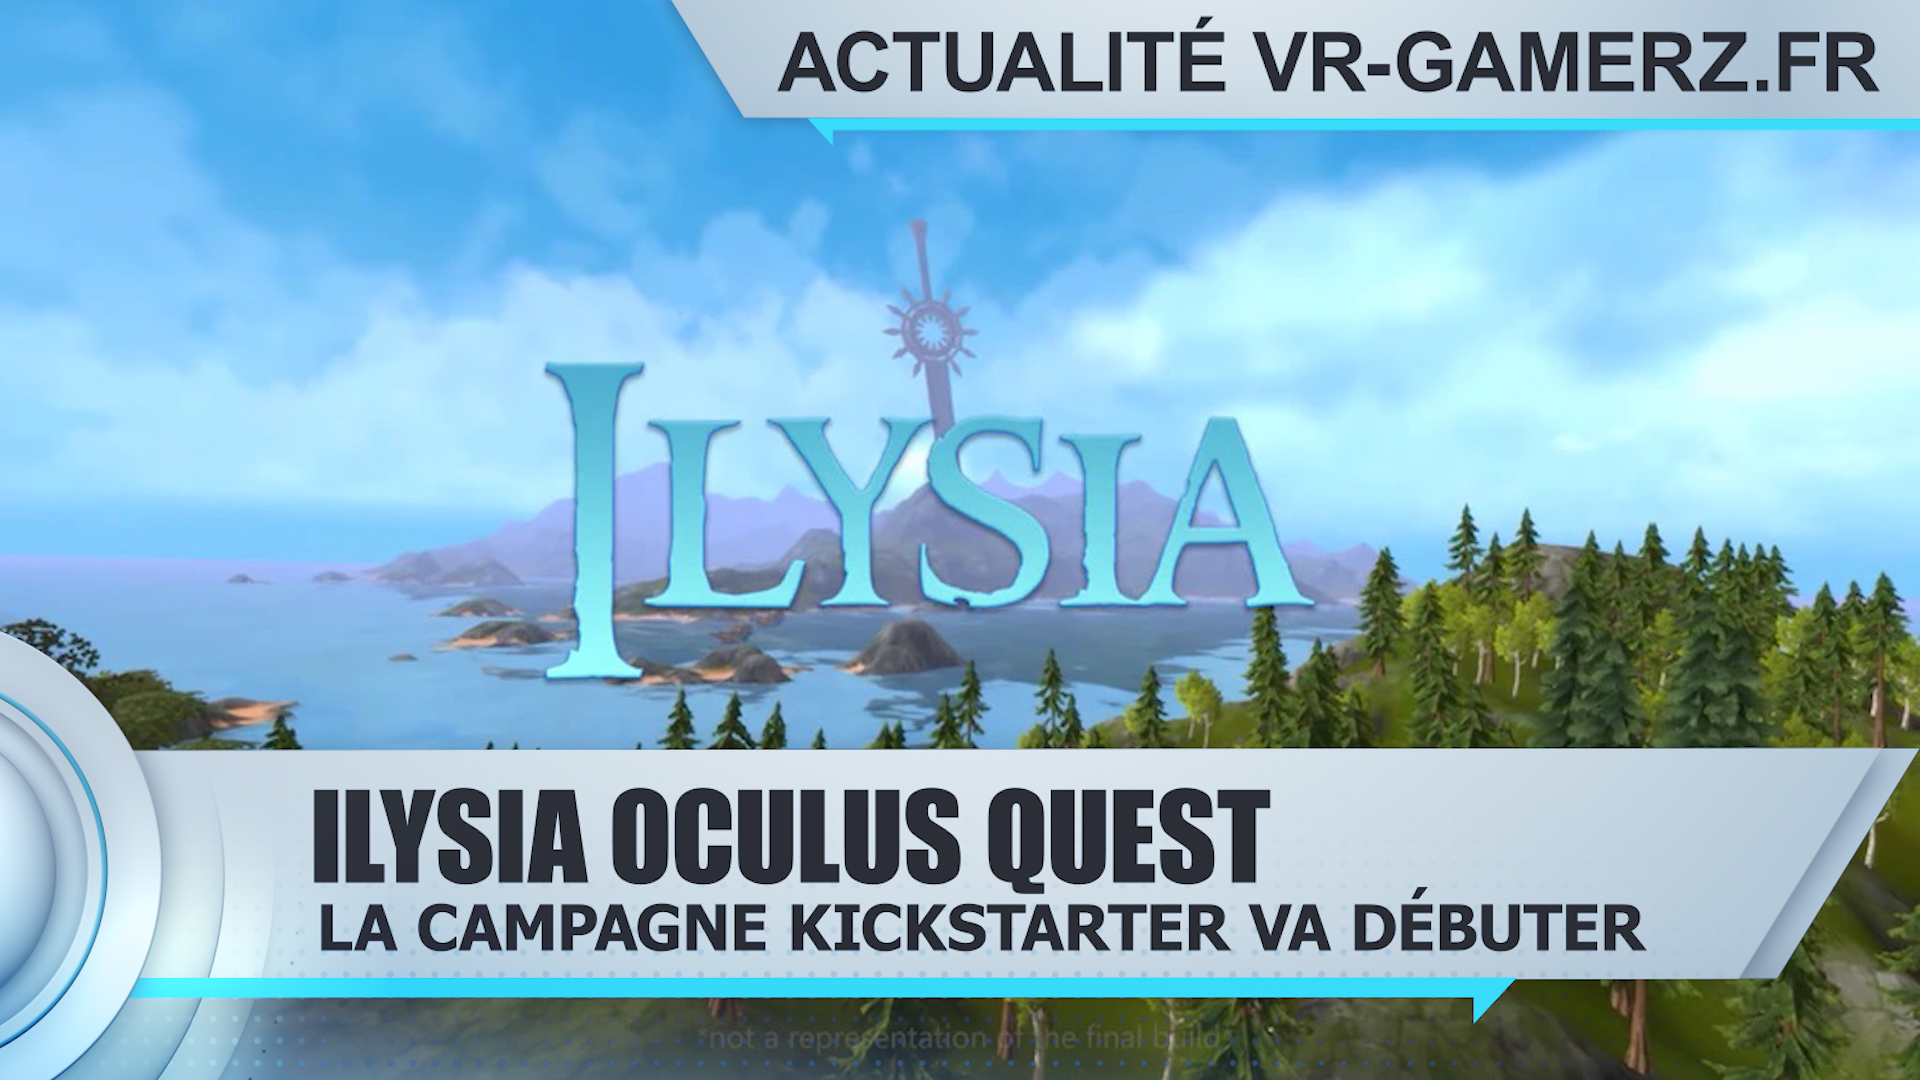 La campagne kickstarter d’Ilysia va débuter demain !